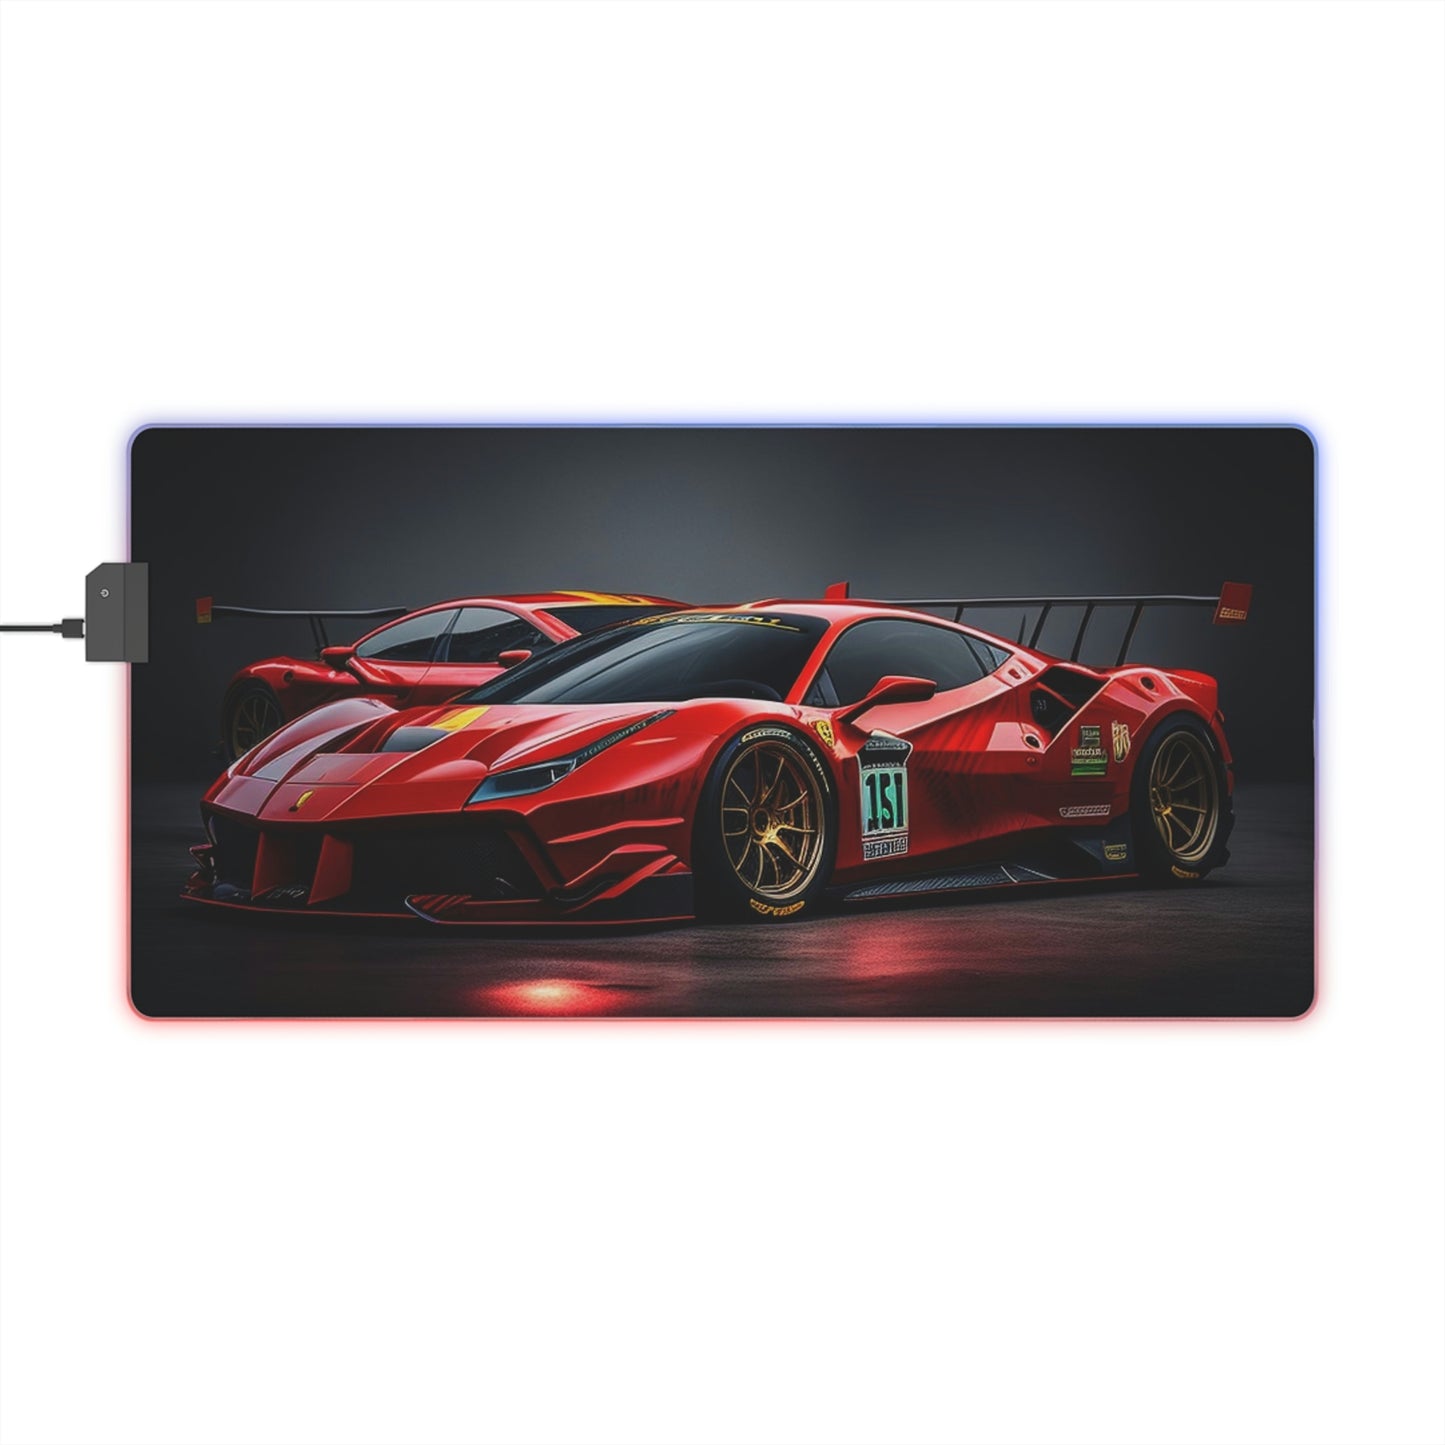 LED Gaming Mouse Pad Ferrari Red 2